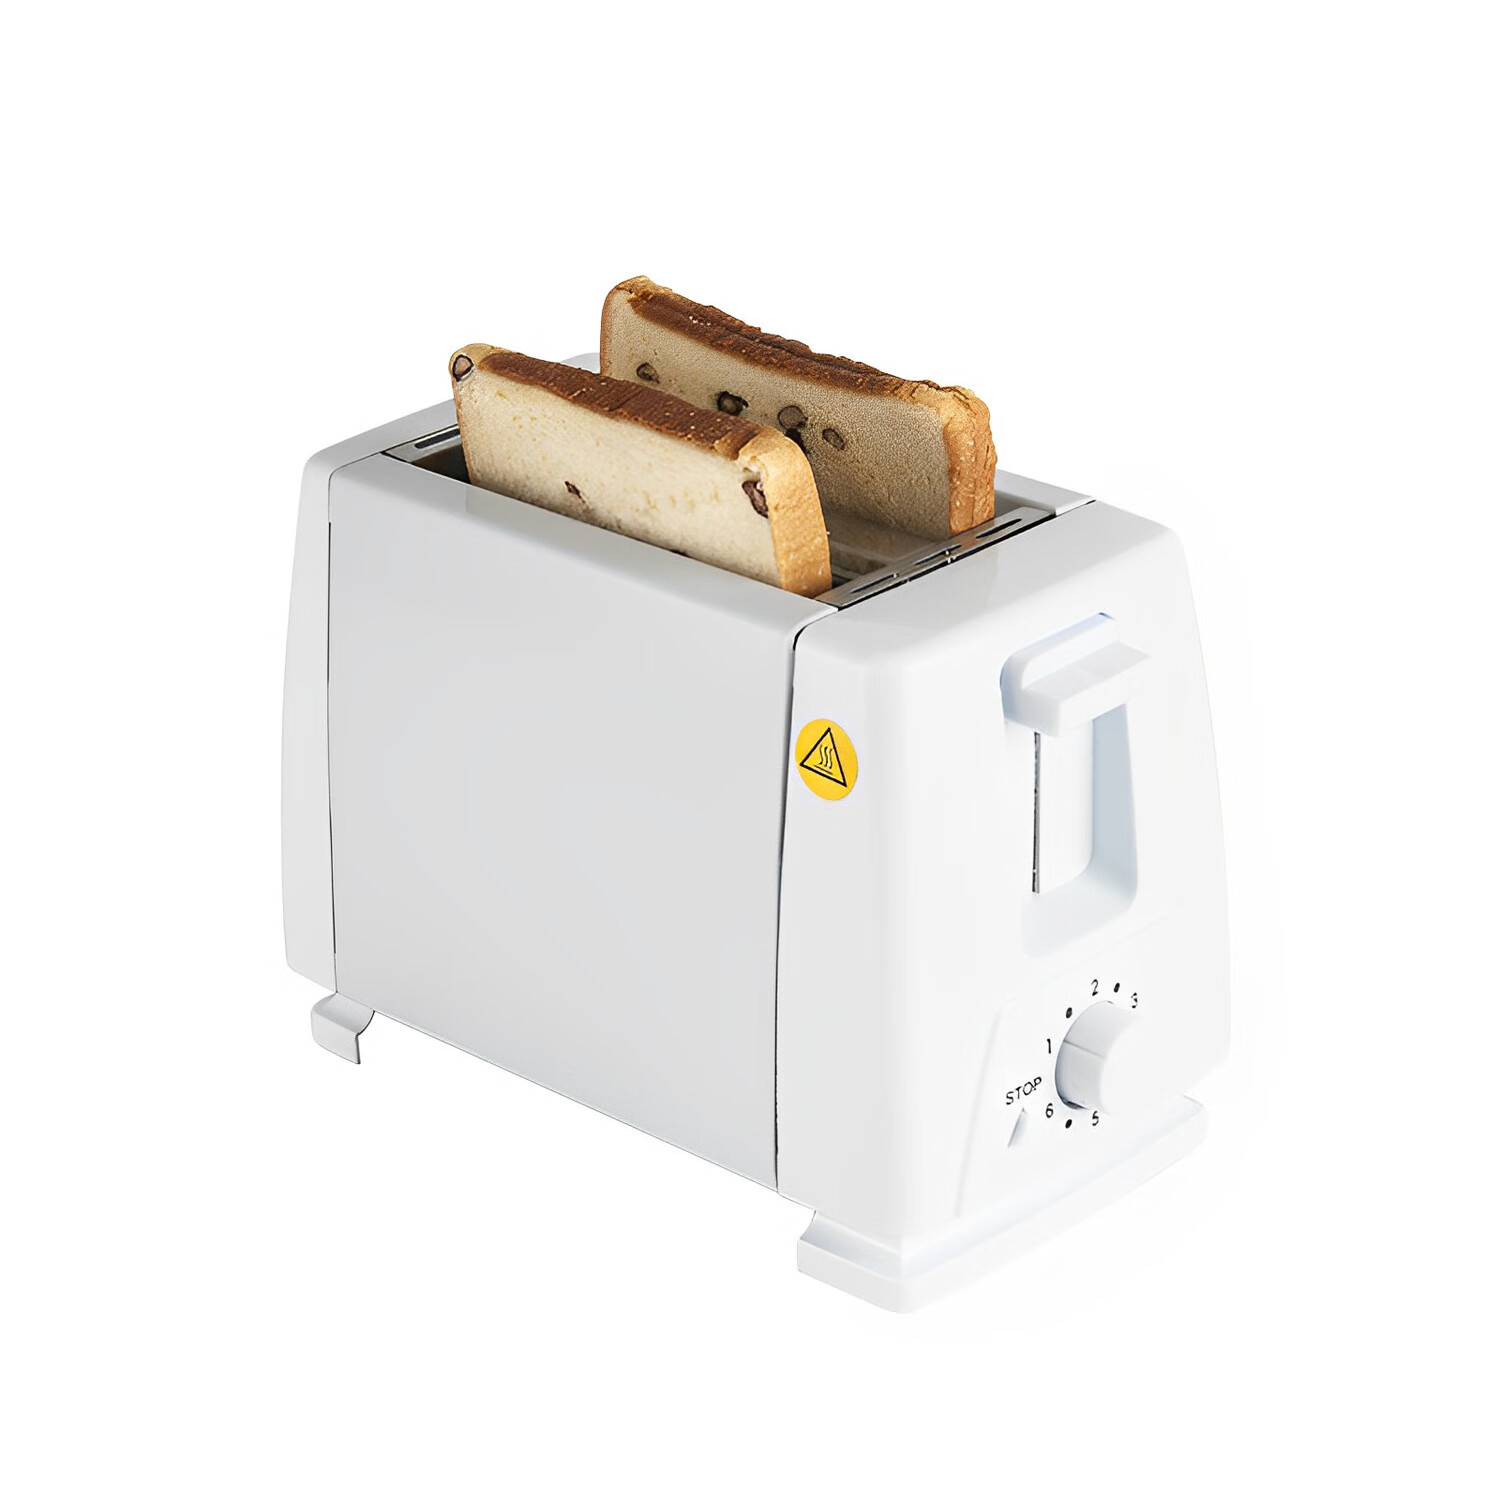 UOSU德国进口三明治早餐机面包机家用小型 全自动早餐吐司机 面包机白色(欧规